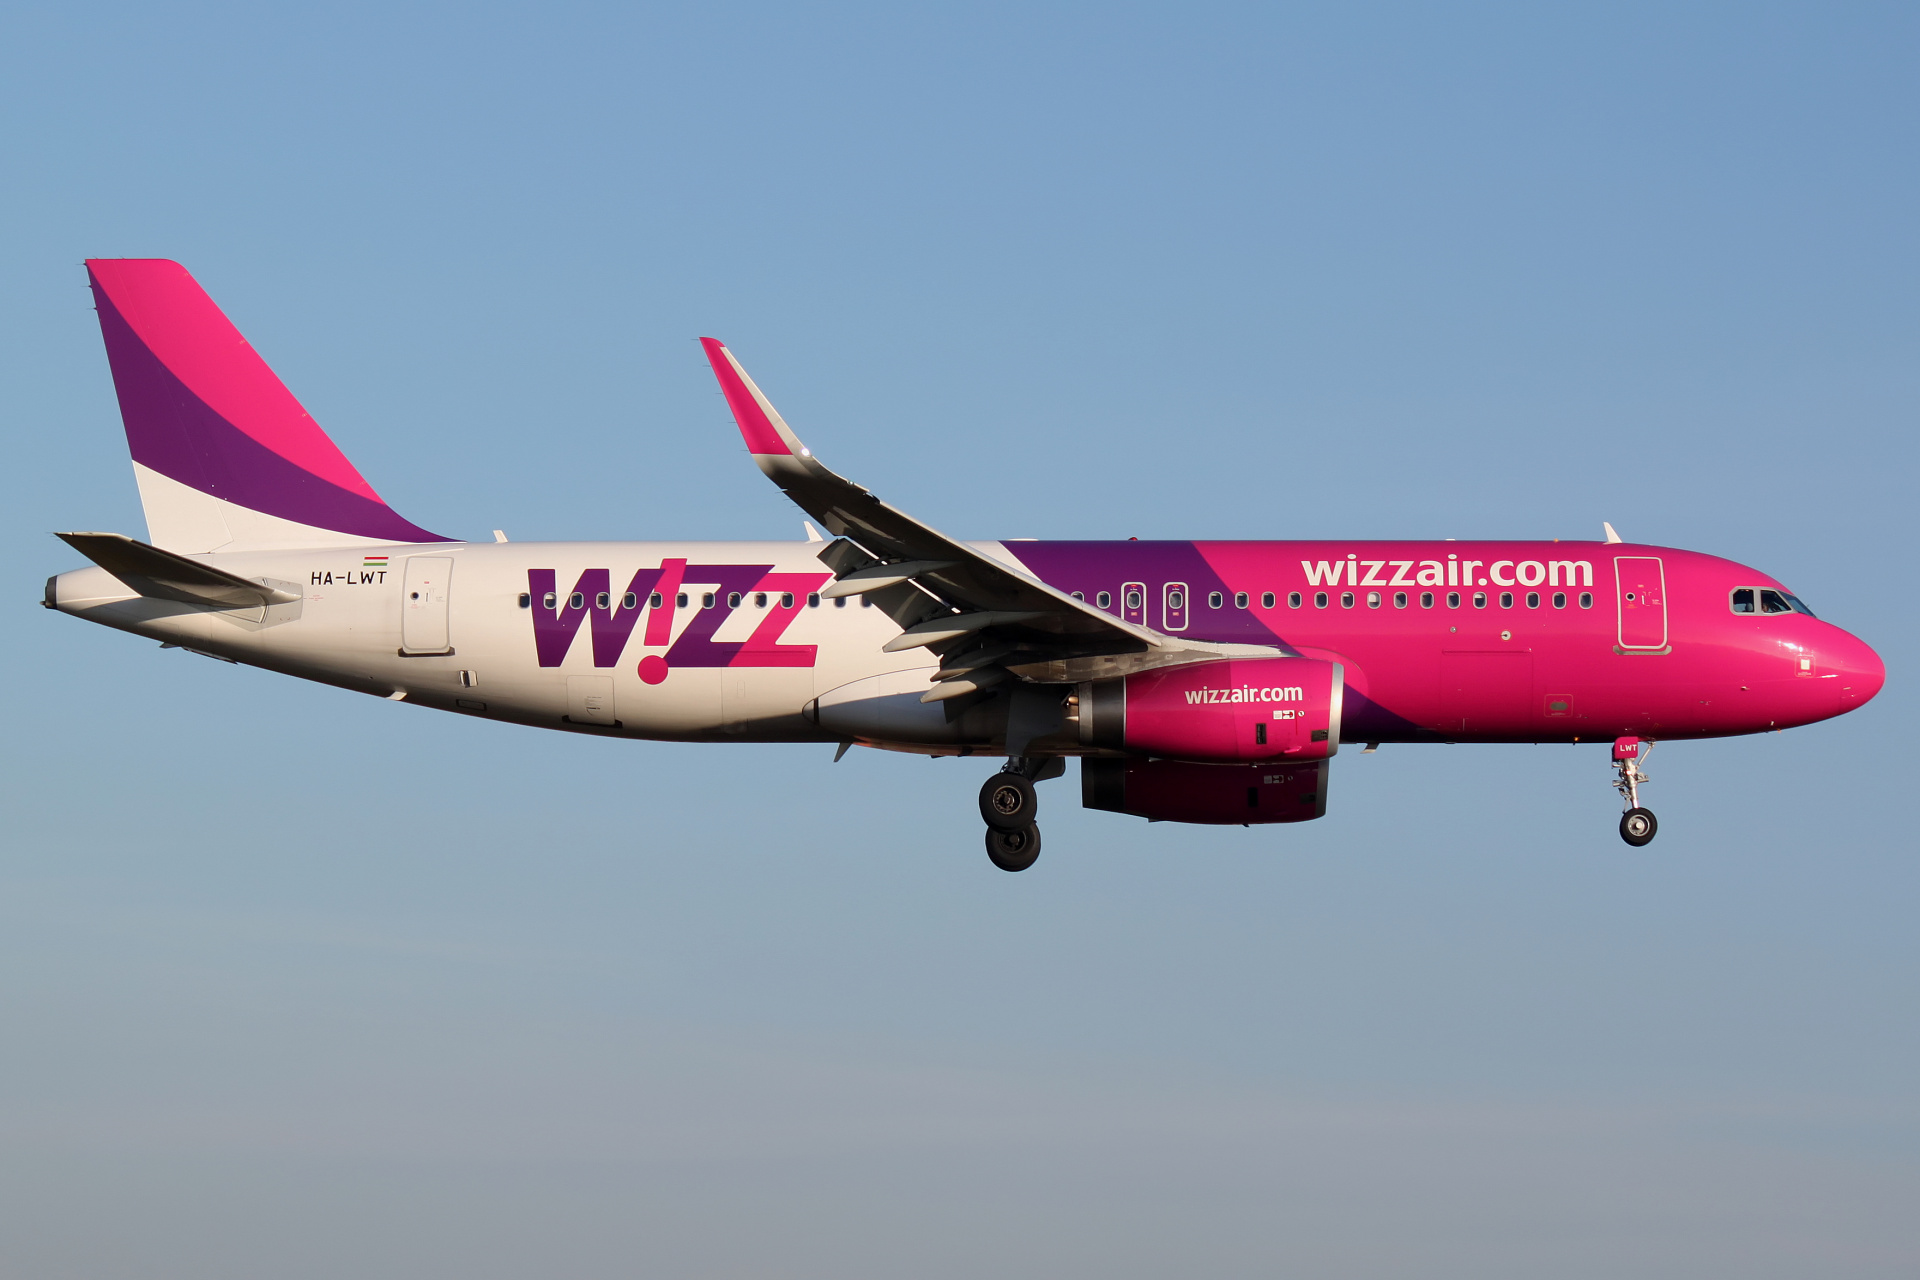 HA-LWT (Aircraft » EPWA Spotting » Airbus A320-200 » Wizz Air)